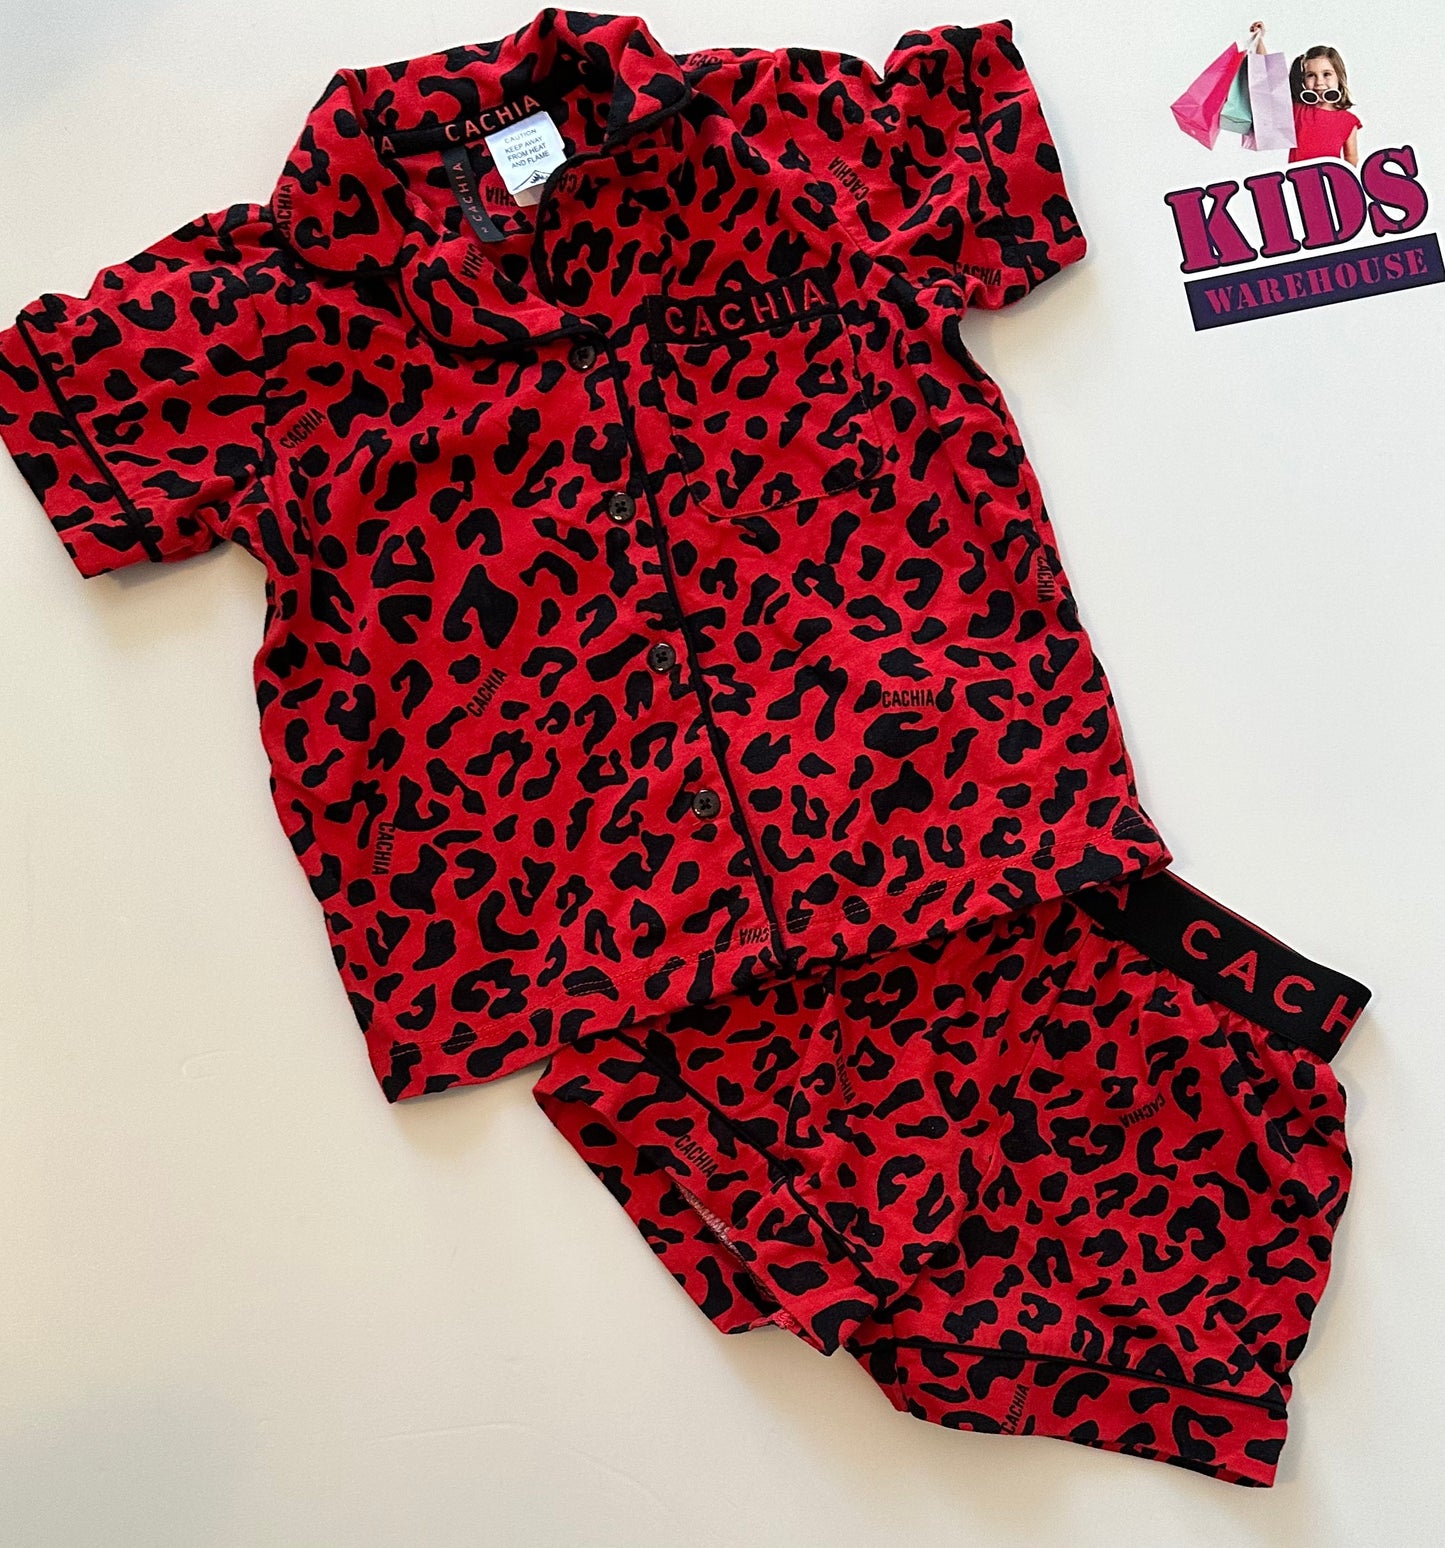 Cachia 2 Piece Red Leopard Set Size 2